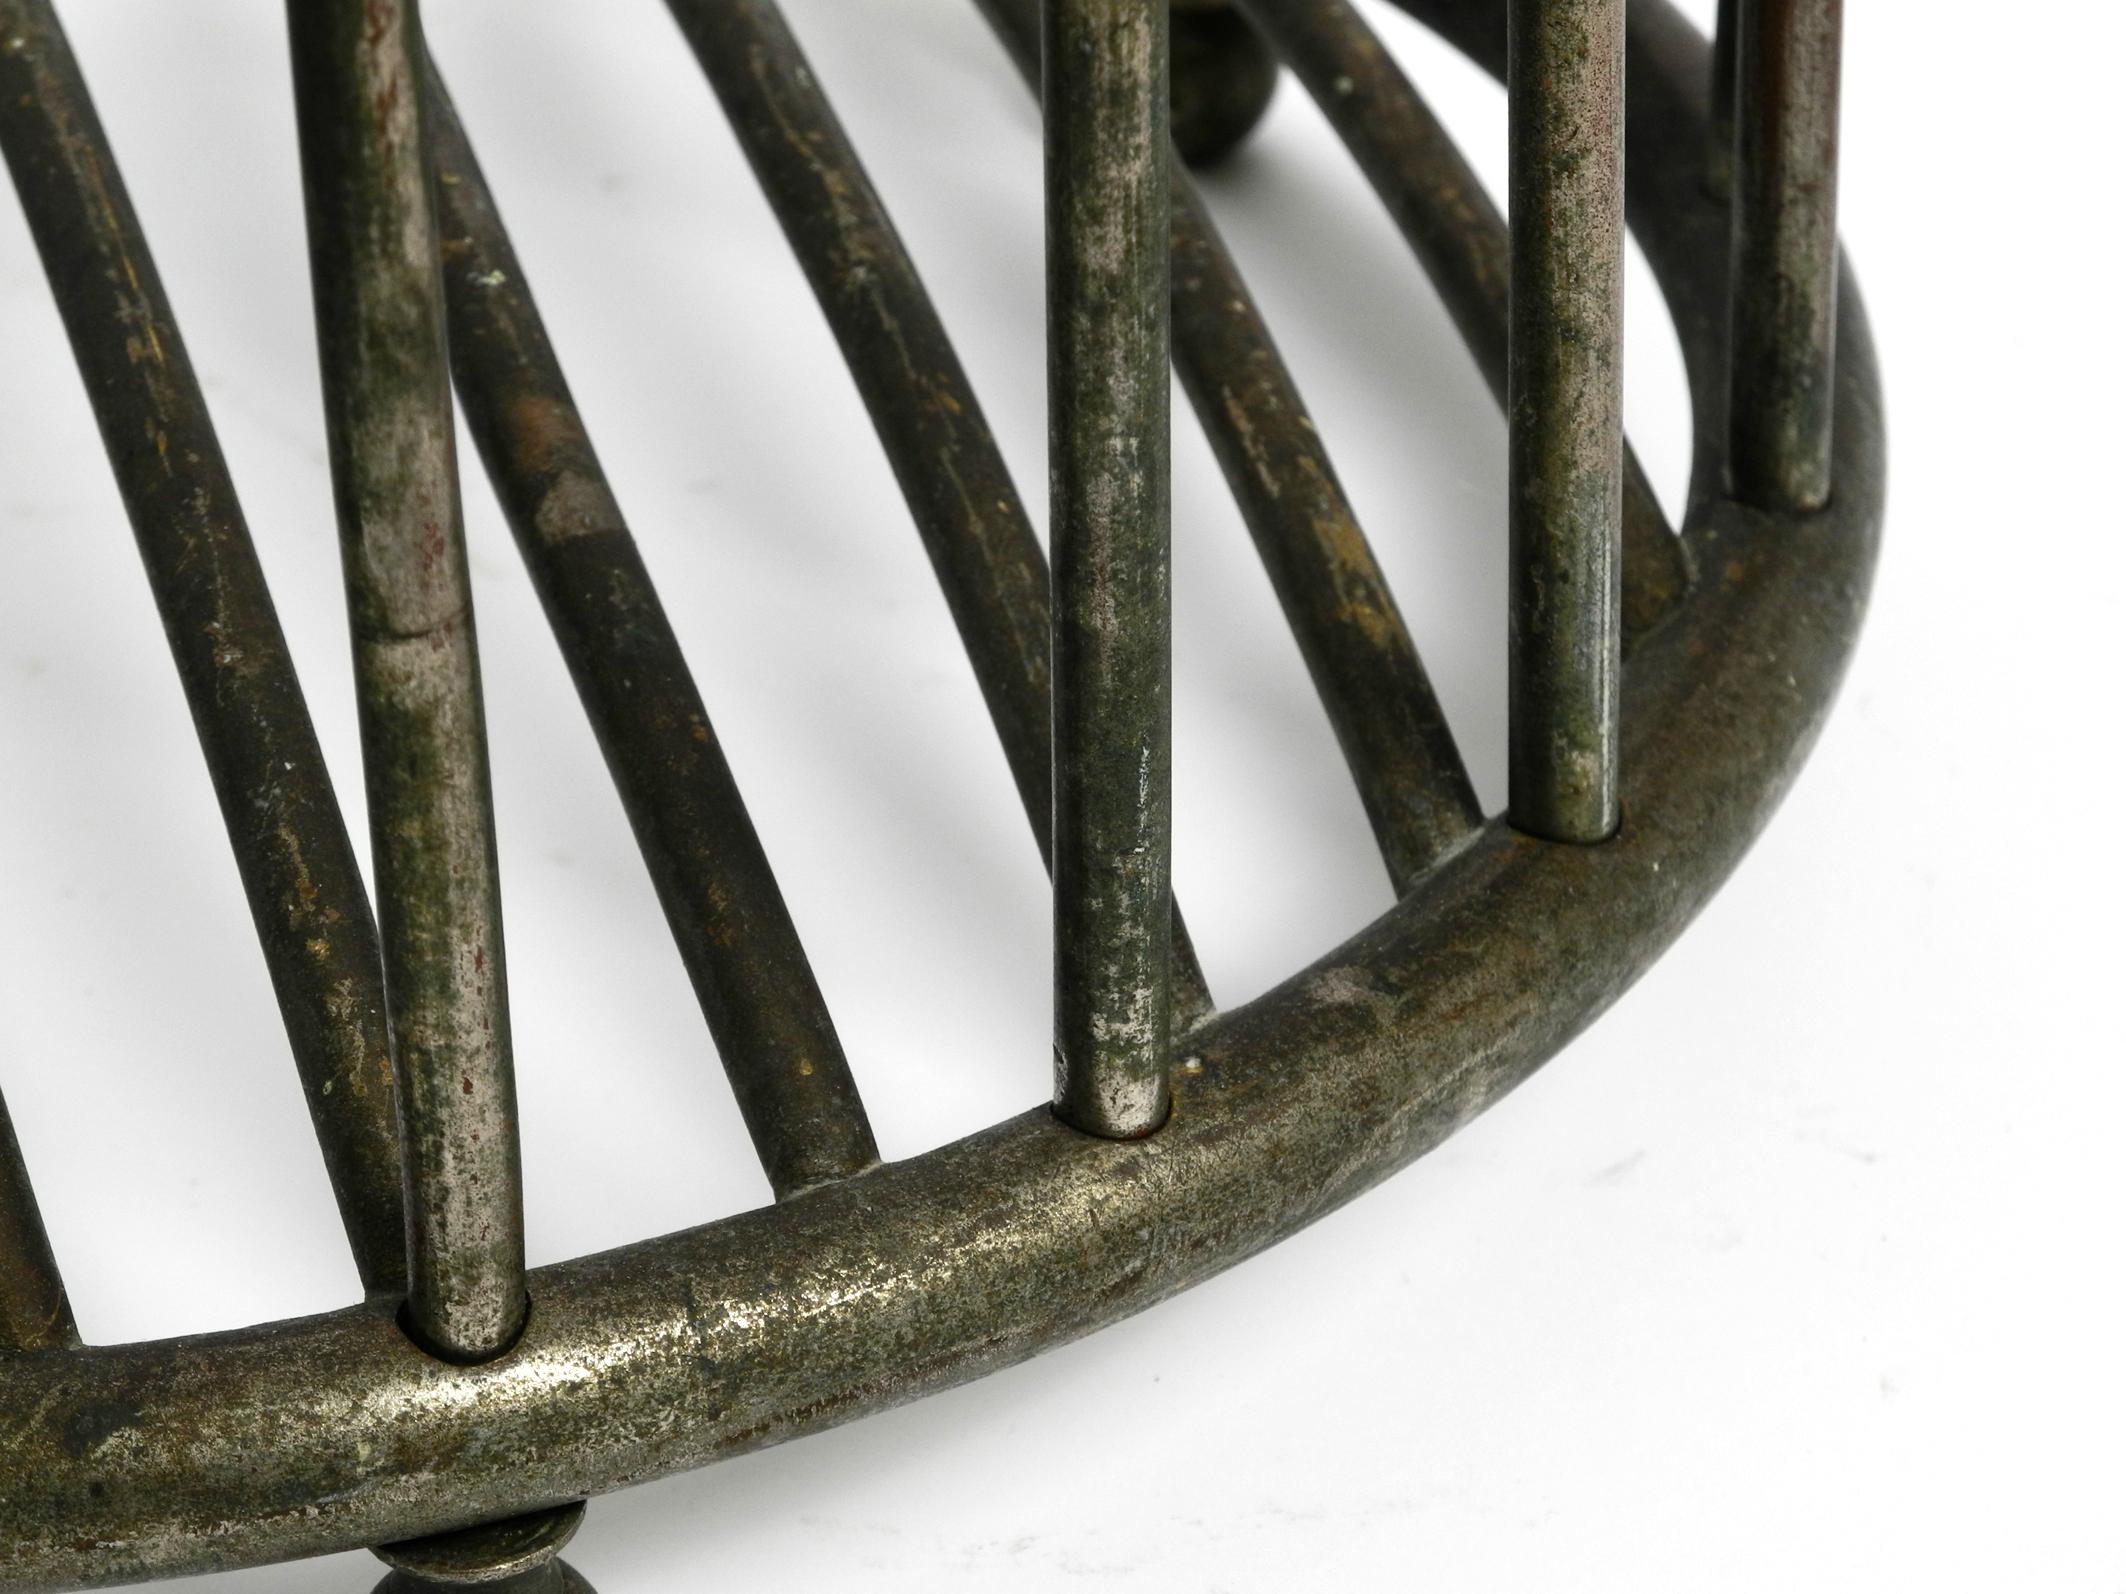 Original Mott's Plumbing Towel Basket Made of Nickel-Plated Brass from the 1910s 13